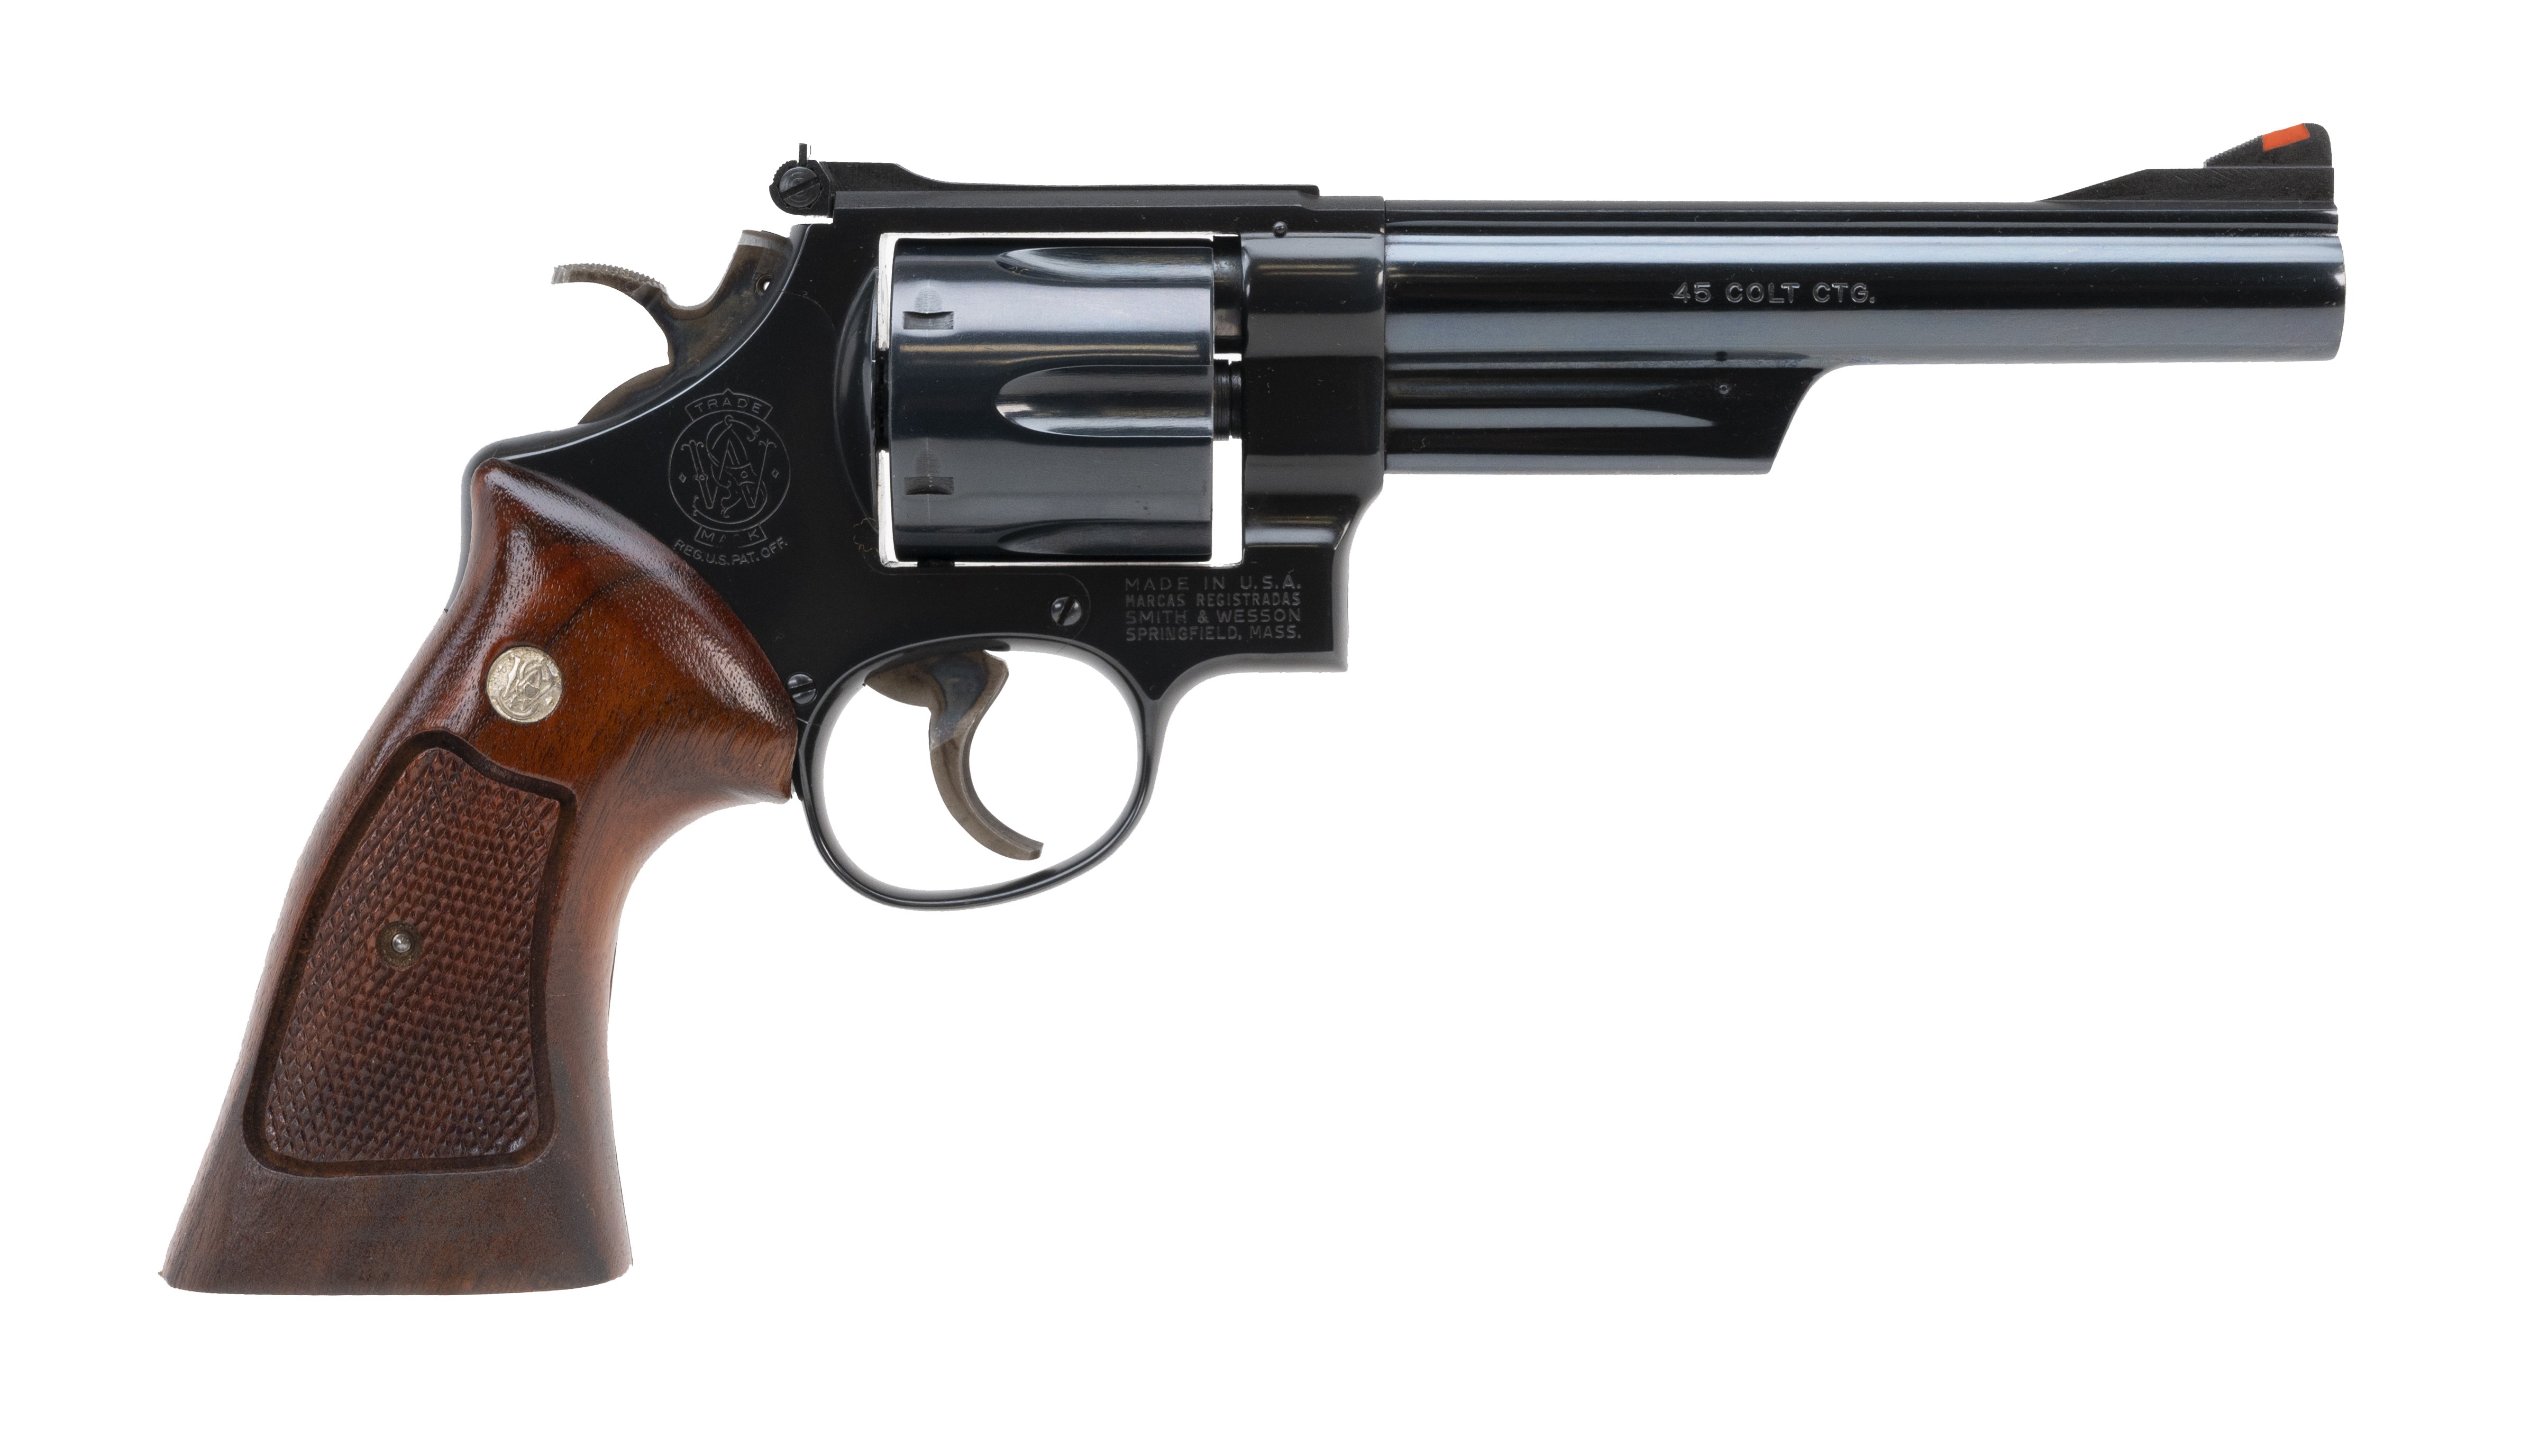 Smith & Wesson 25-5 .45 LC caliber revolver for sale.